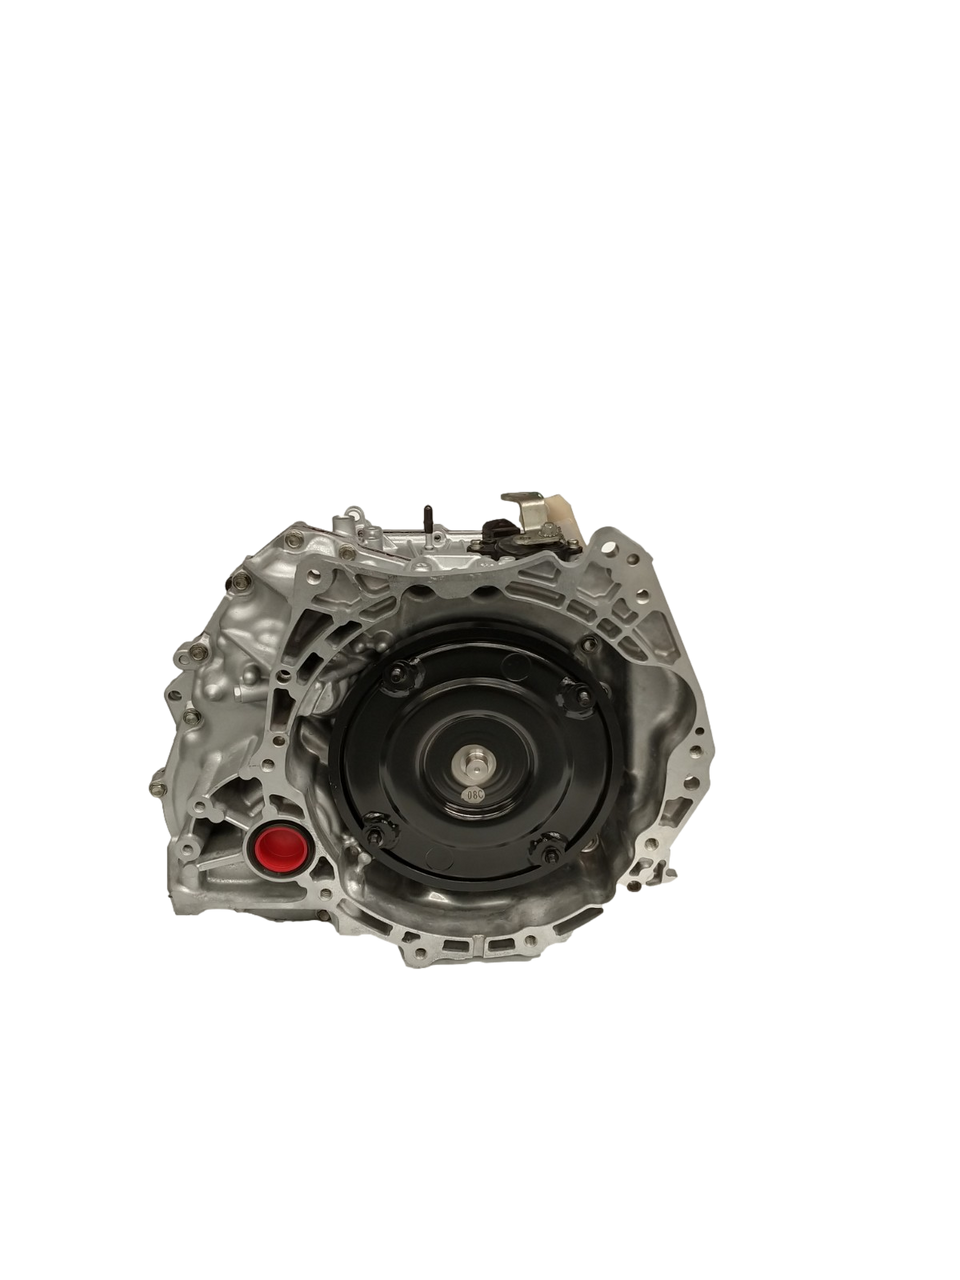 JF015 CVT Transmission Nissan Pulsar with MR18 Engine (REOF011)